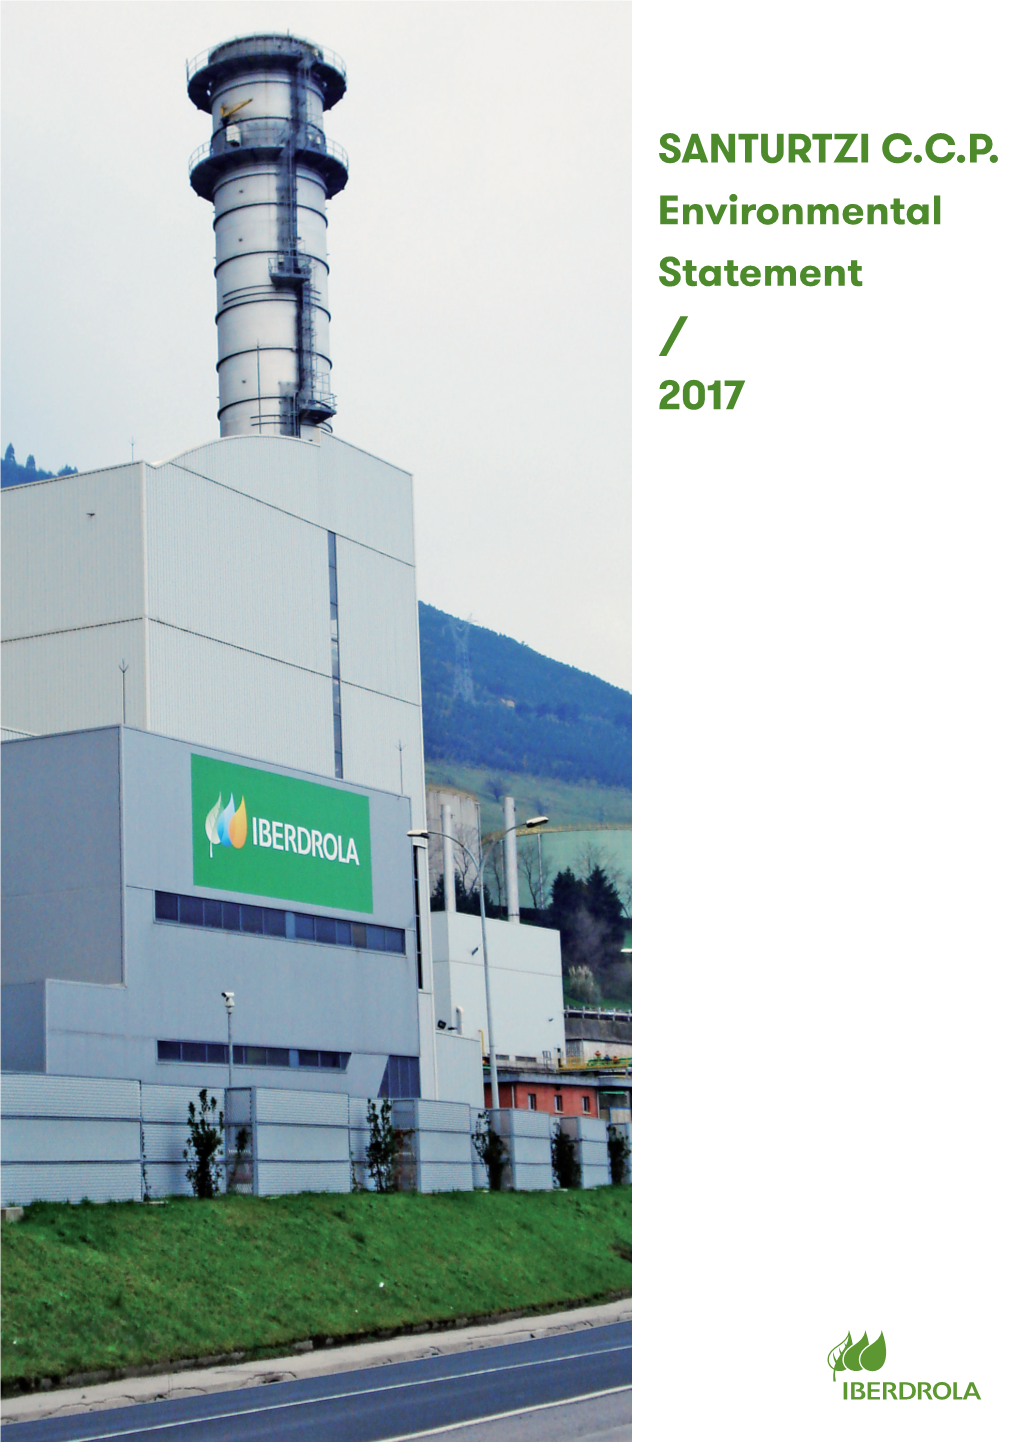 SANTURTZI C.C.P. Environmental Statement / 2017